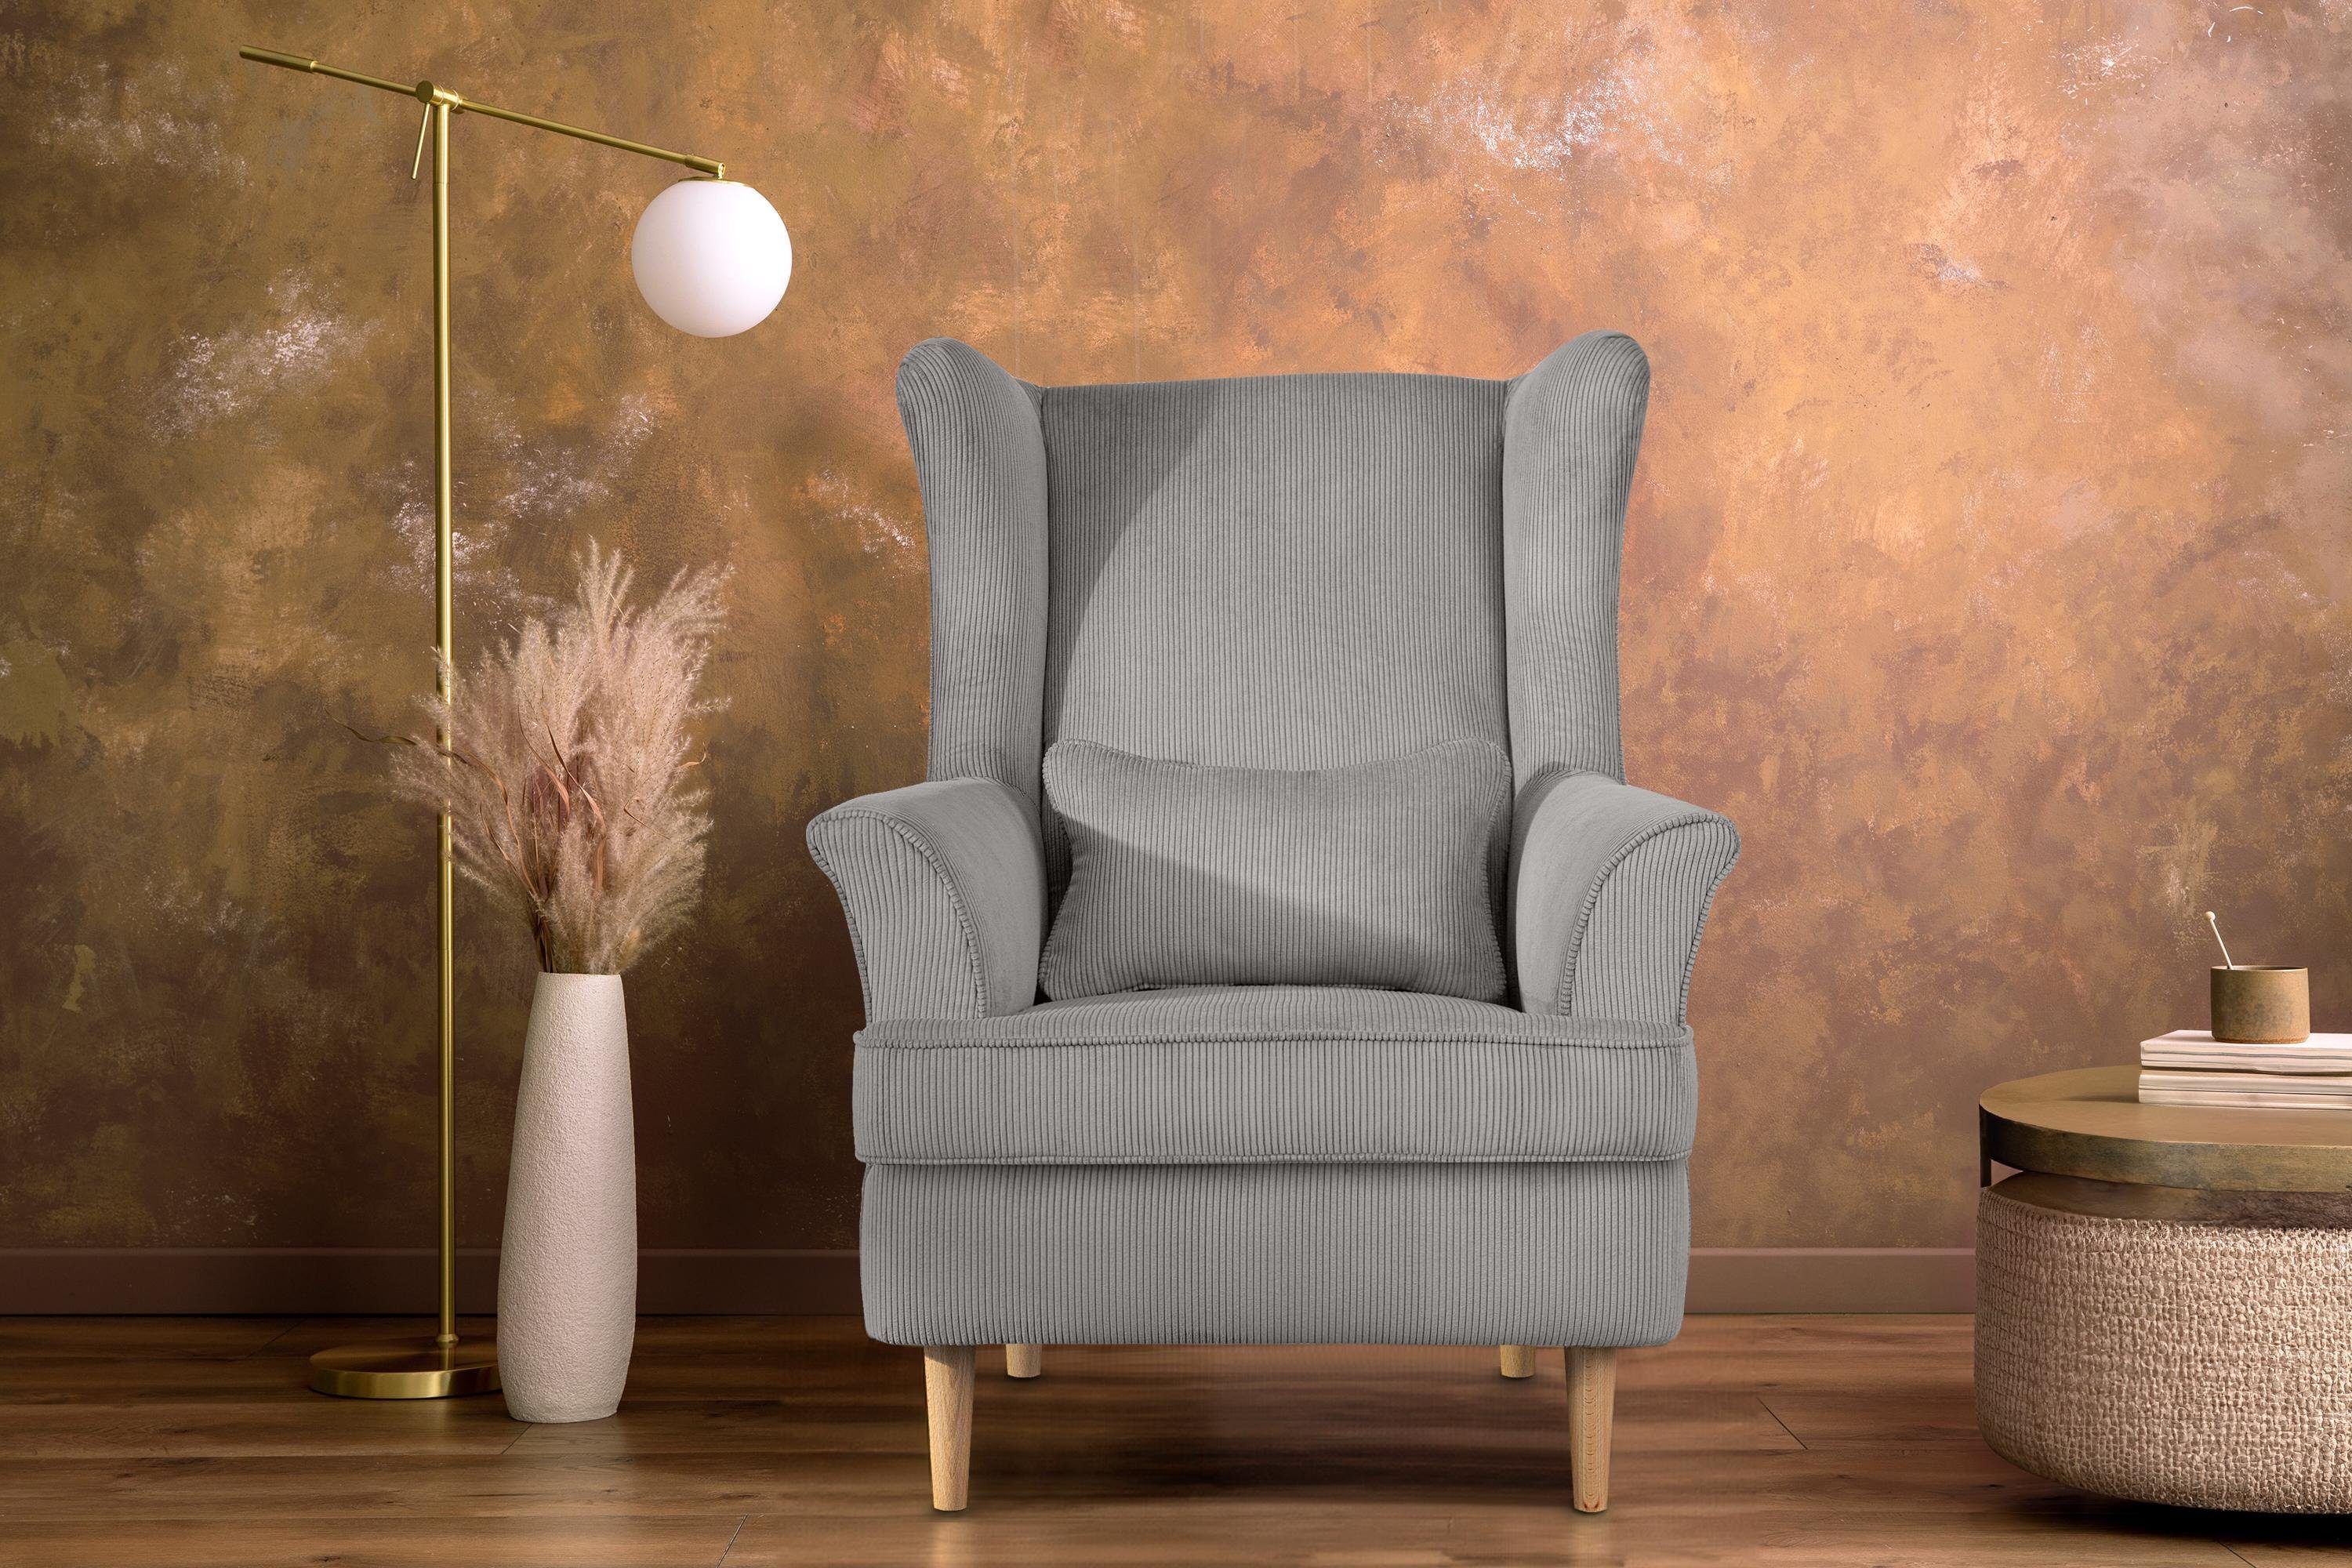 Konsimo Ohrensessel STRALIS Sessel, zeitloses inklusive Design, Füße, hohe Kissen dekorativem